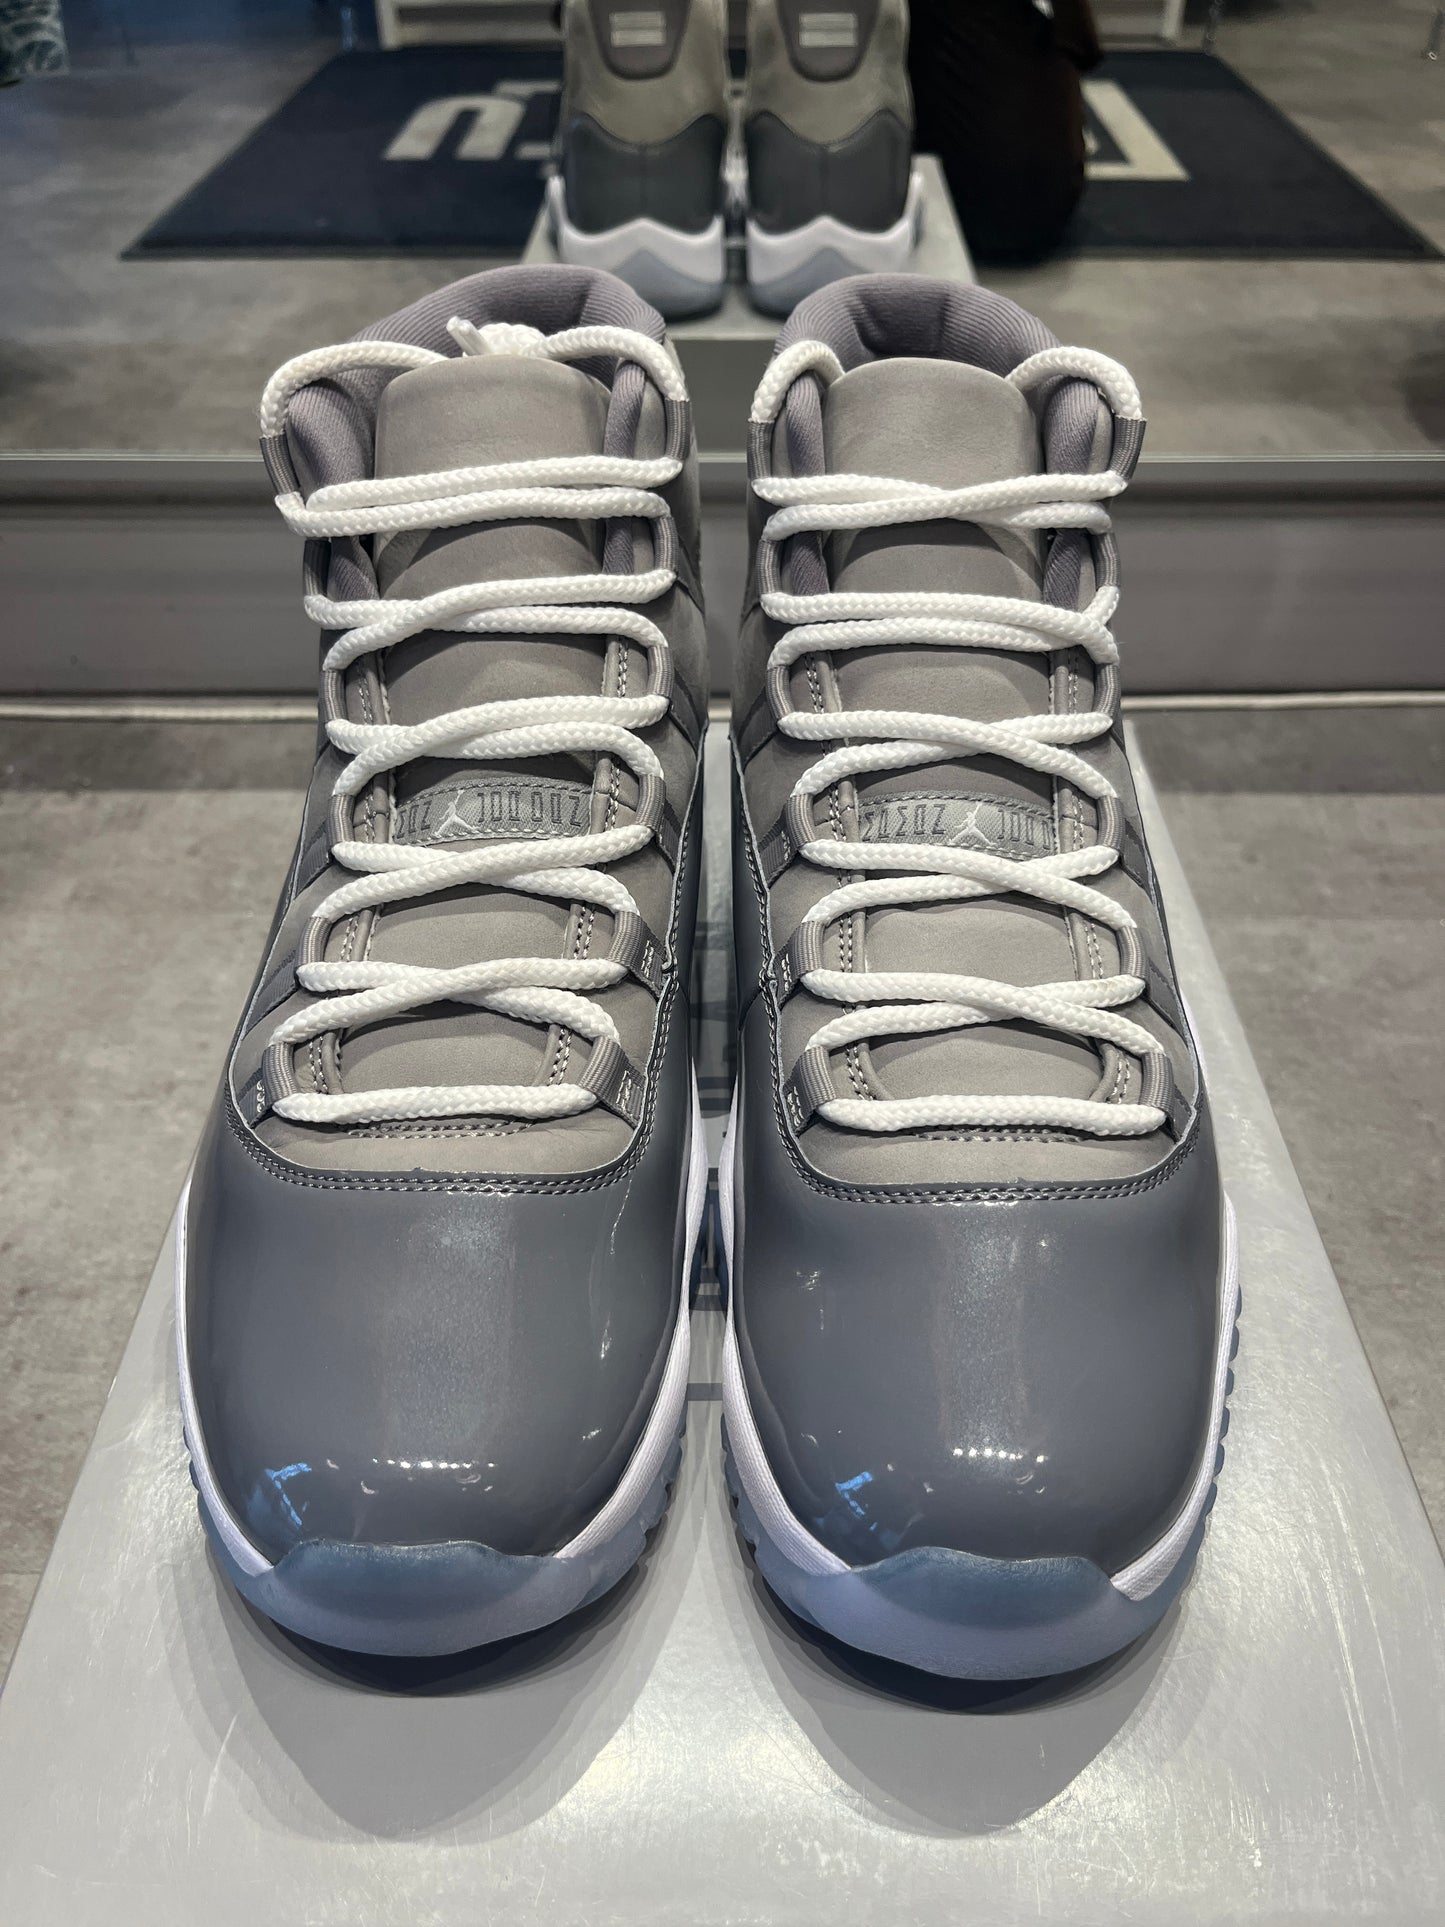 Jordan 11 Retro Cool Grey (2021) (Preowned Size 13)